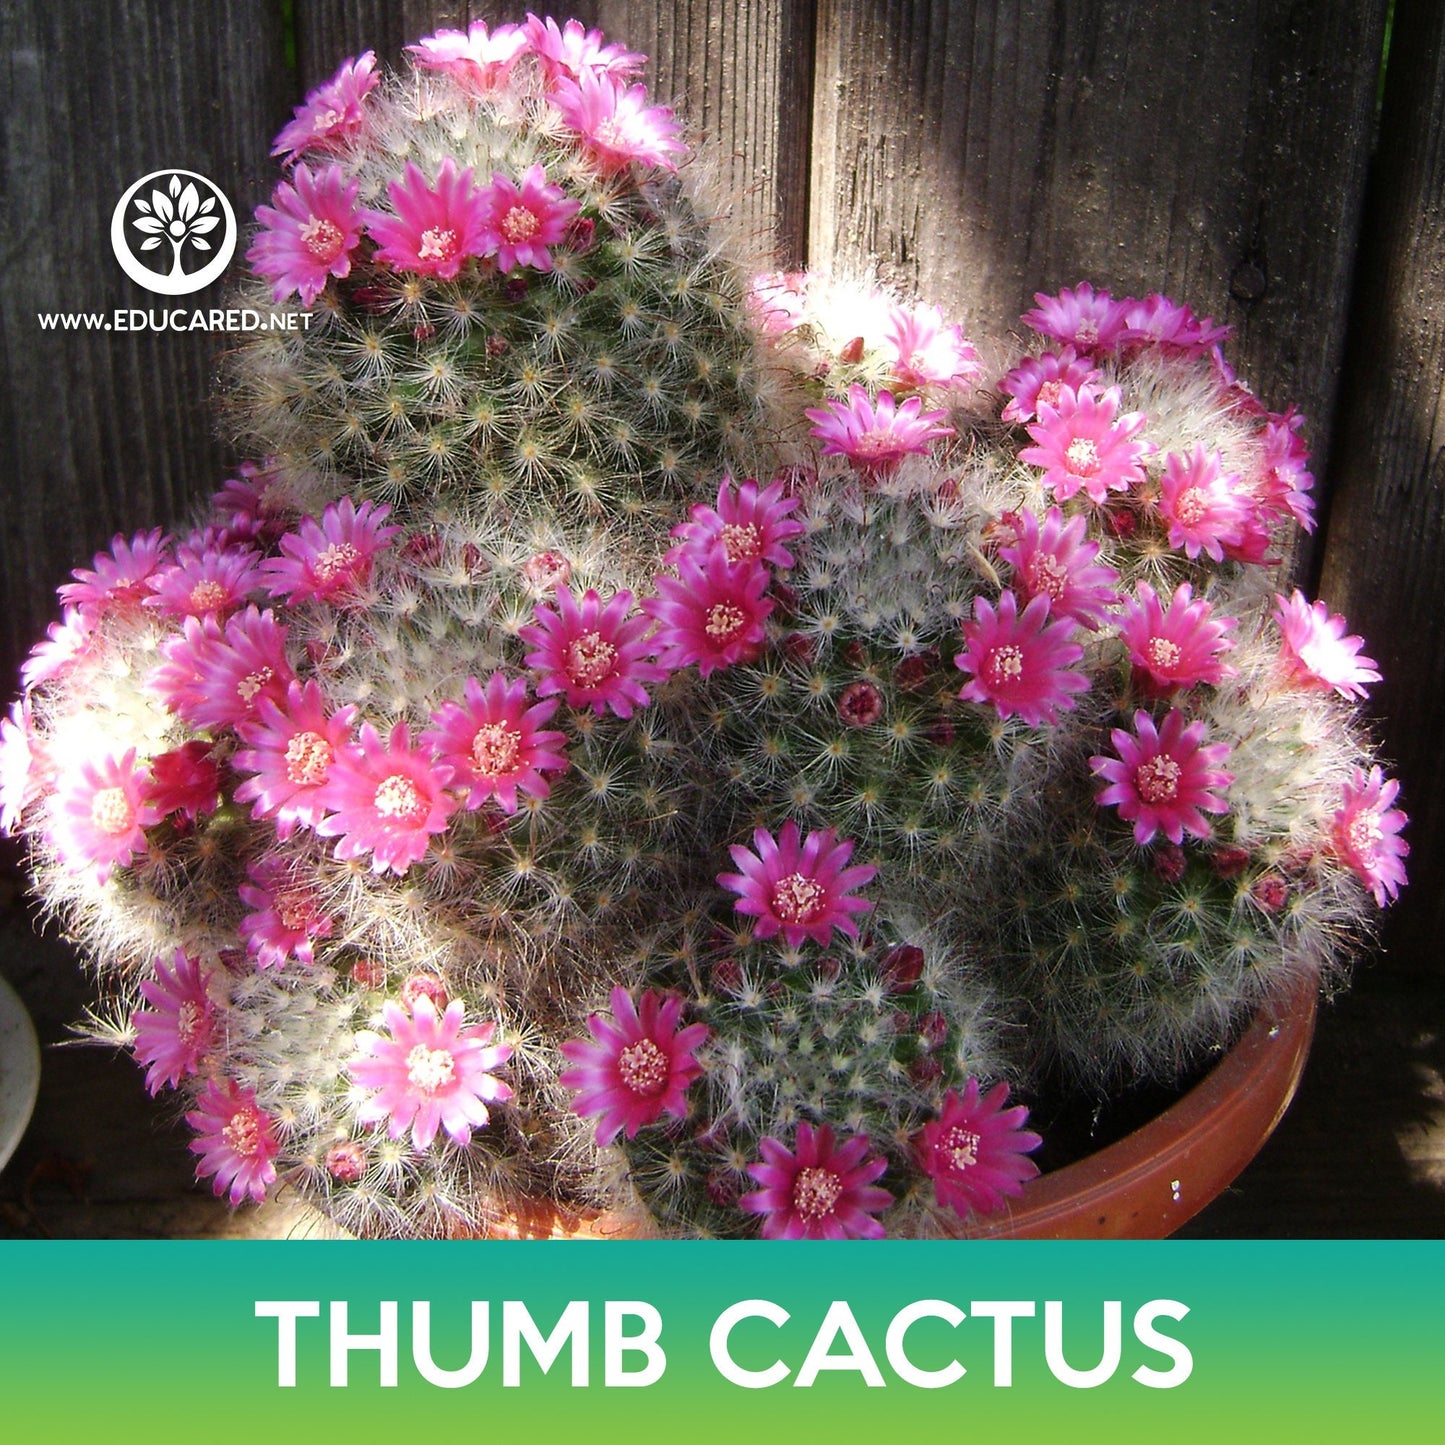 Thumb Cactus Seeds, Mammillaria matudae